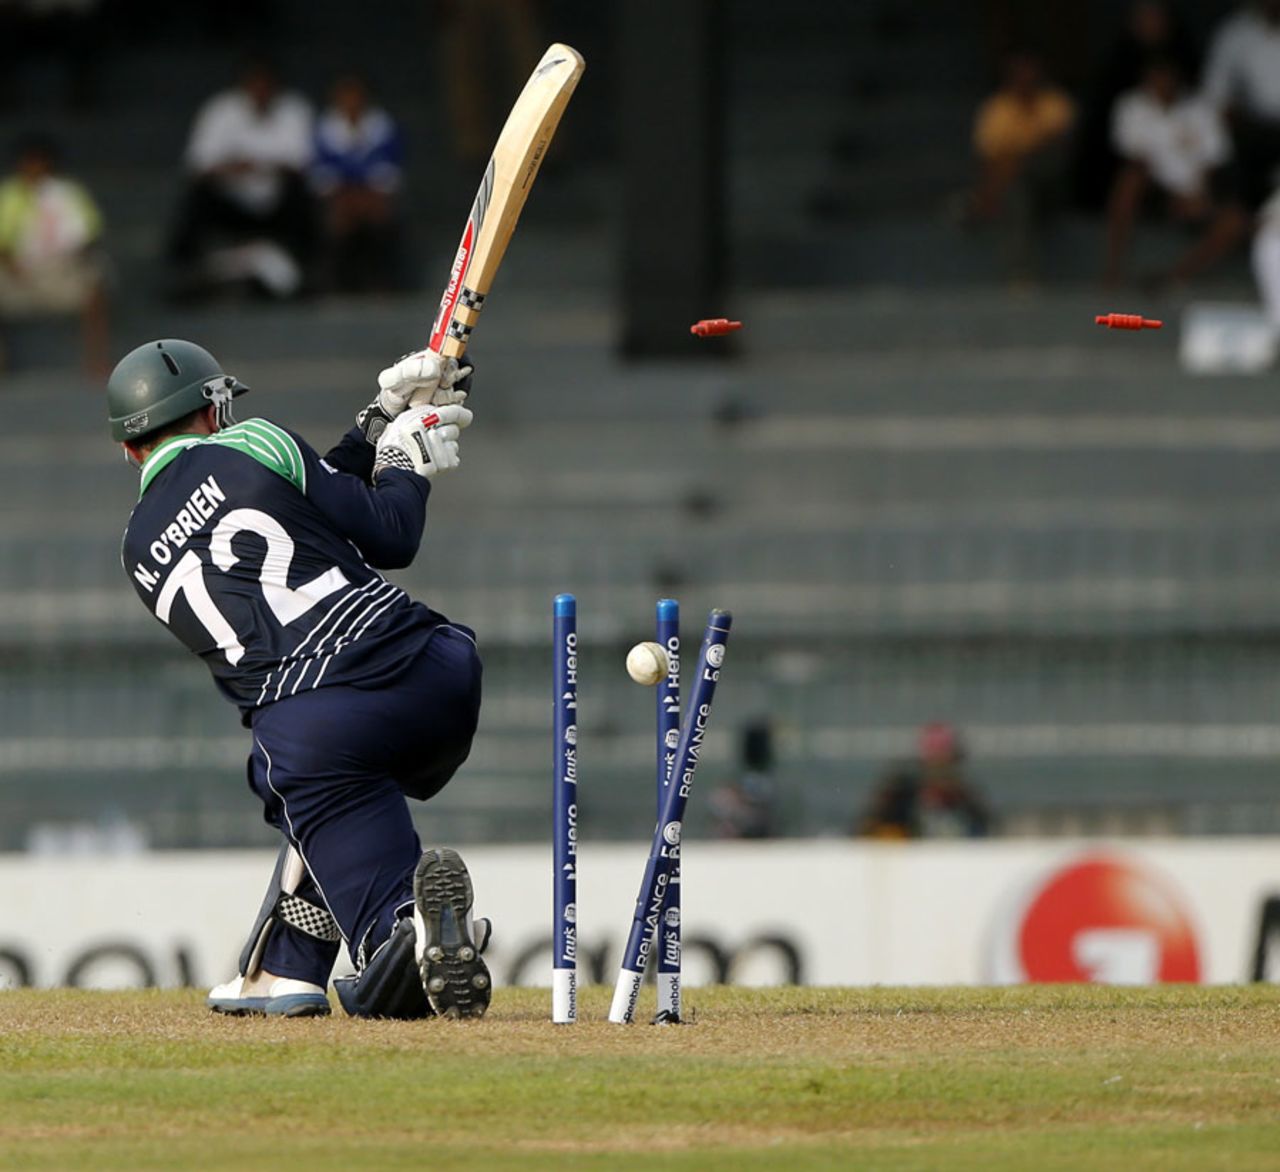 Niall O'Brien was bowled for 20, Australia v Ireland, World Twenty20 2012, Group B, Colombo, September 19, 2012